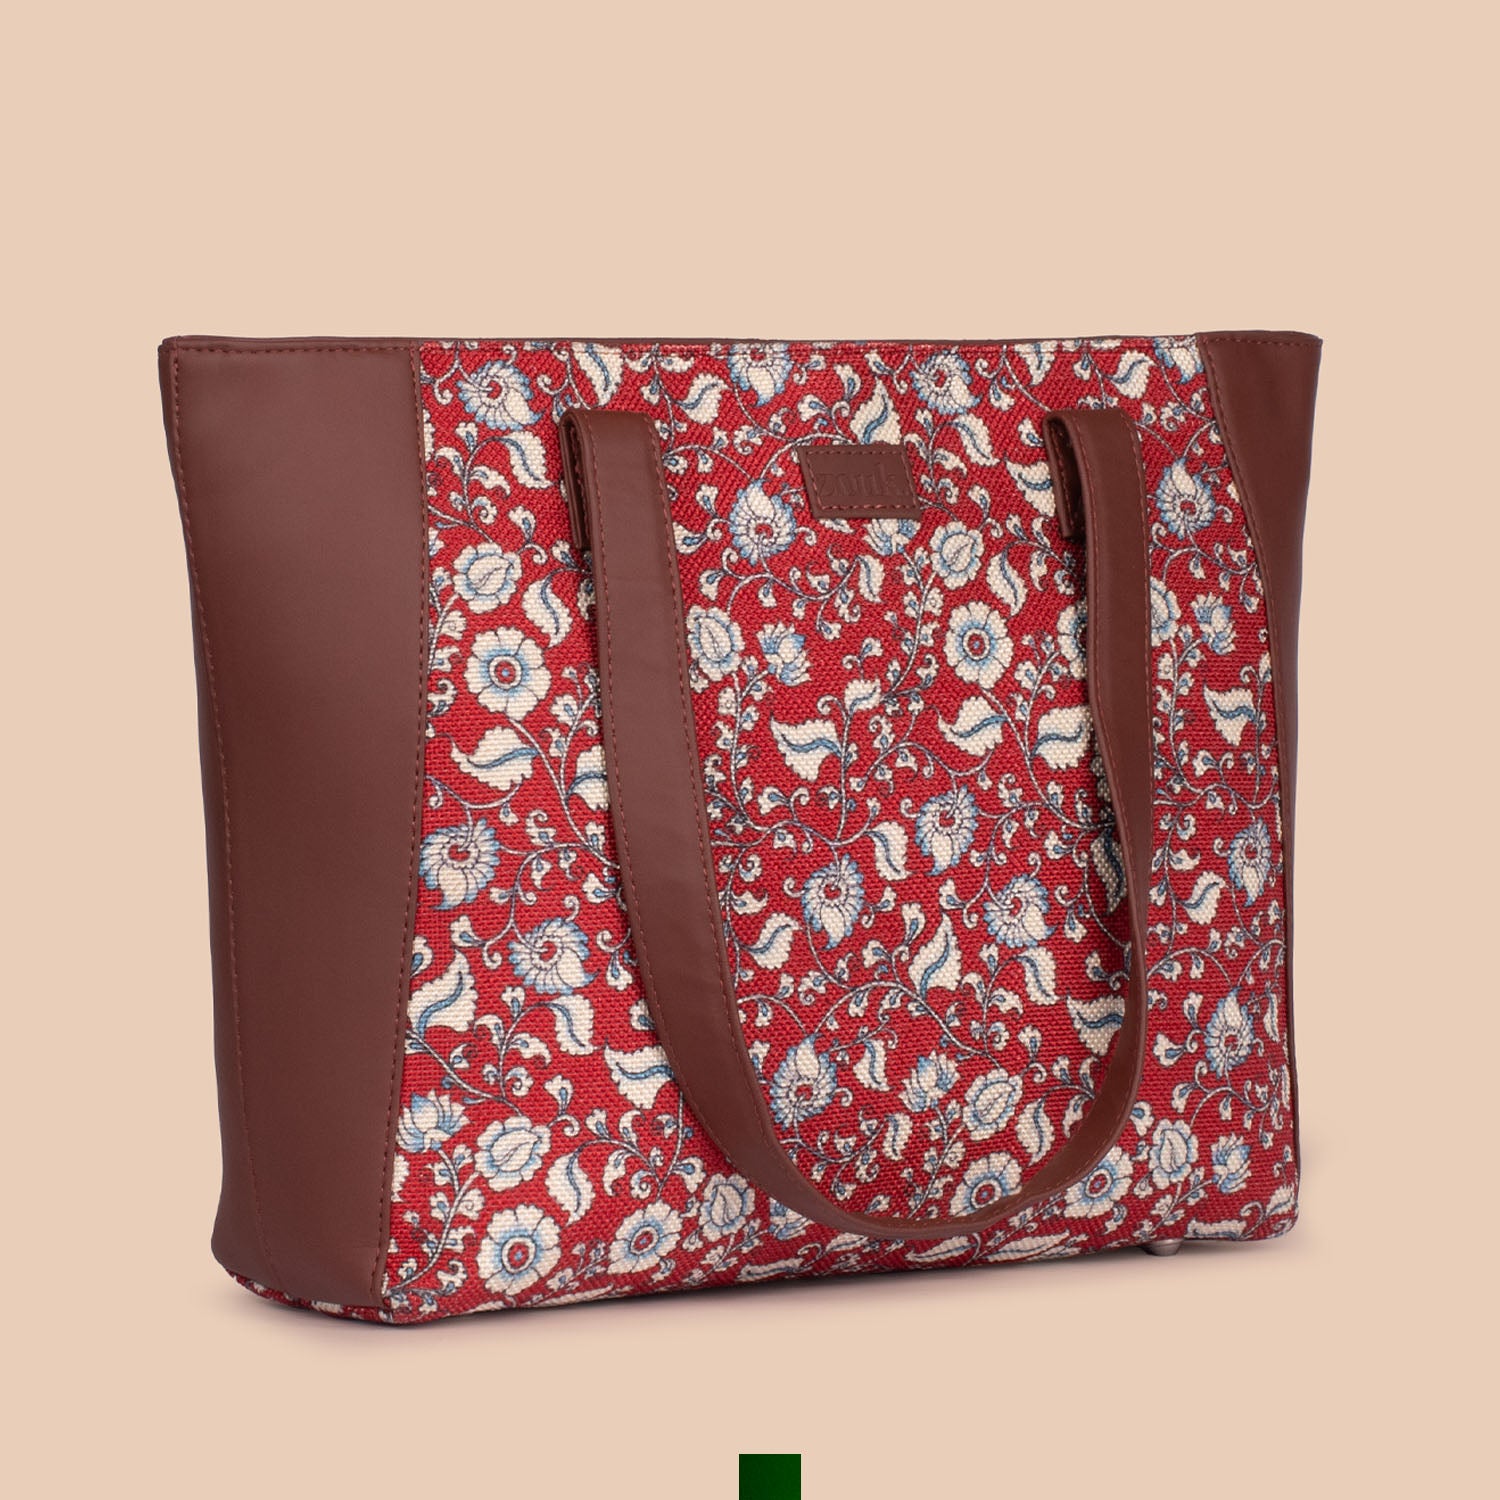 Chittoor Red Kalamkari Side Tote Bag